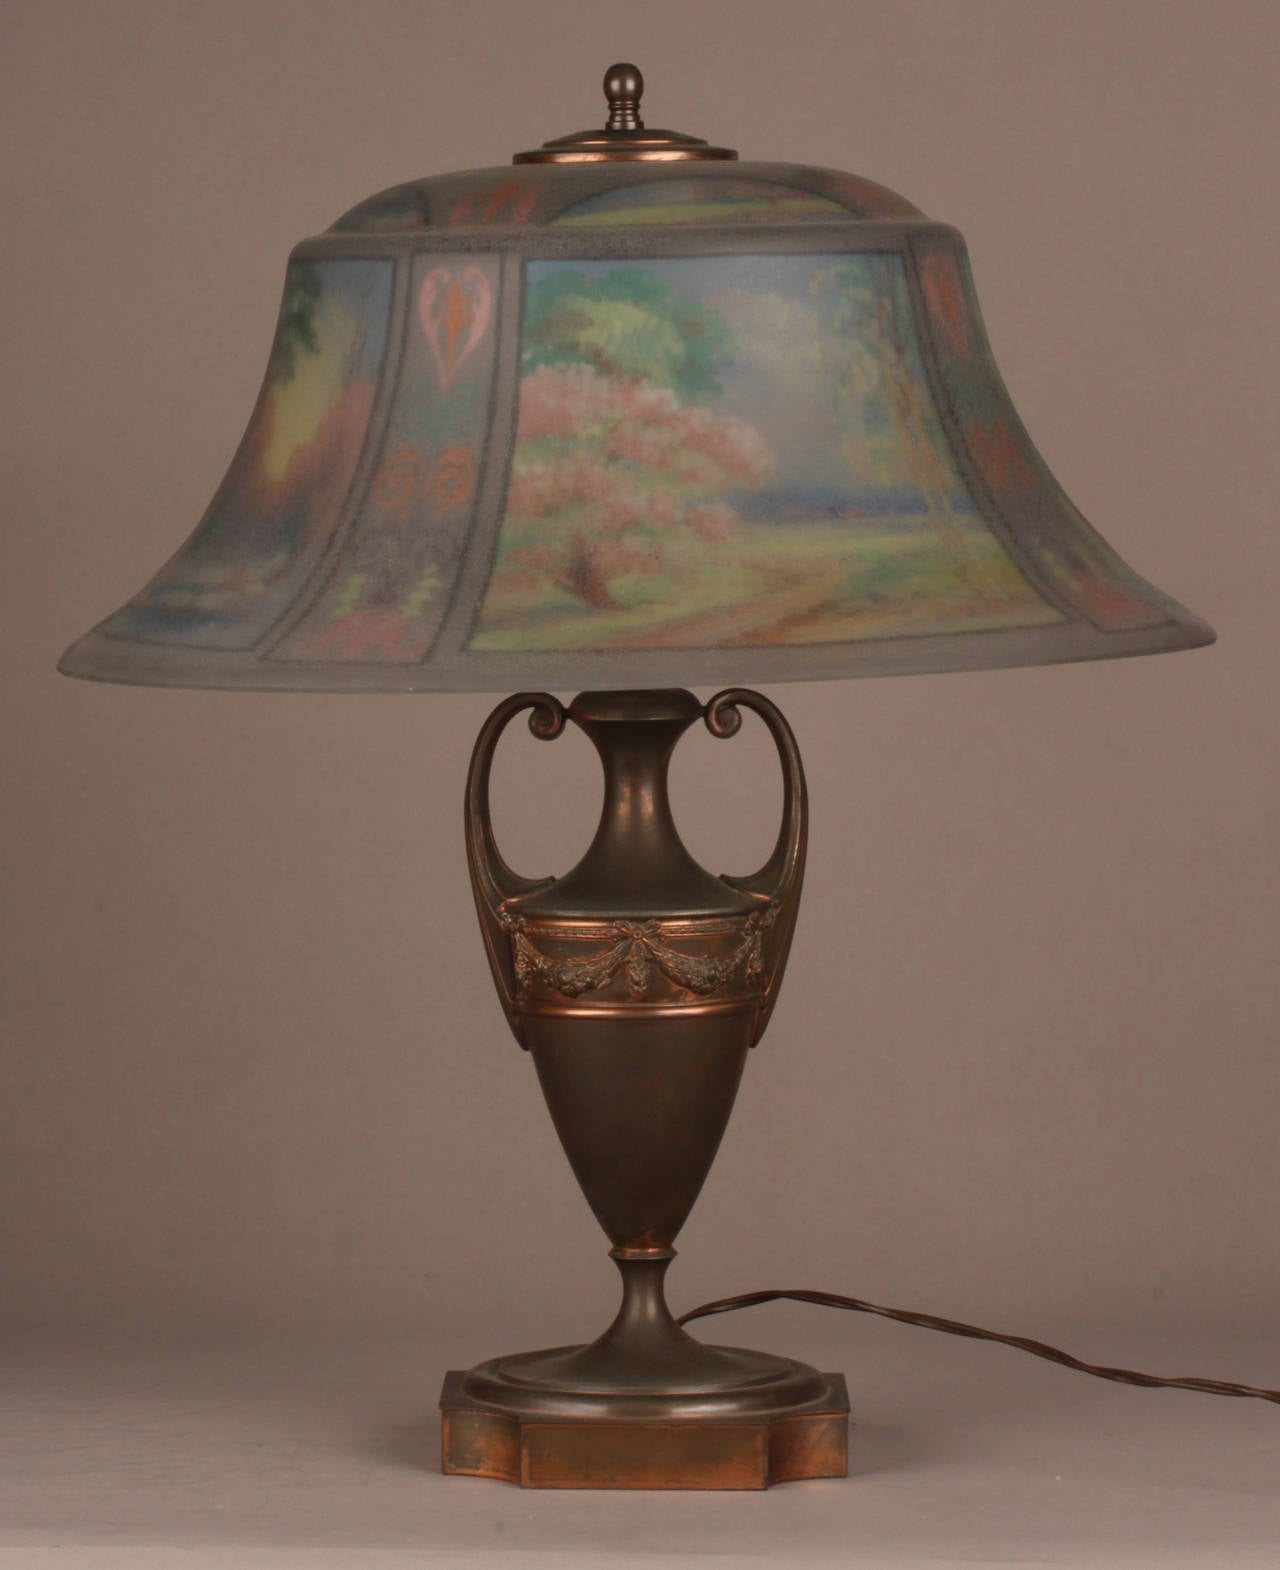 A Pairpoint Reverse Painted Art Nouveau Lamp Depicting the Four Seasons

Circa 1910

Origin: Massachusetts, United States

Diameter: 17.25